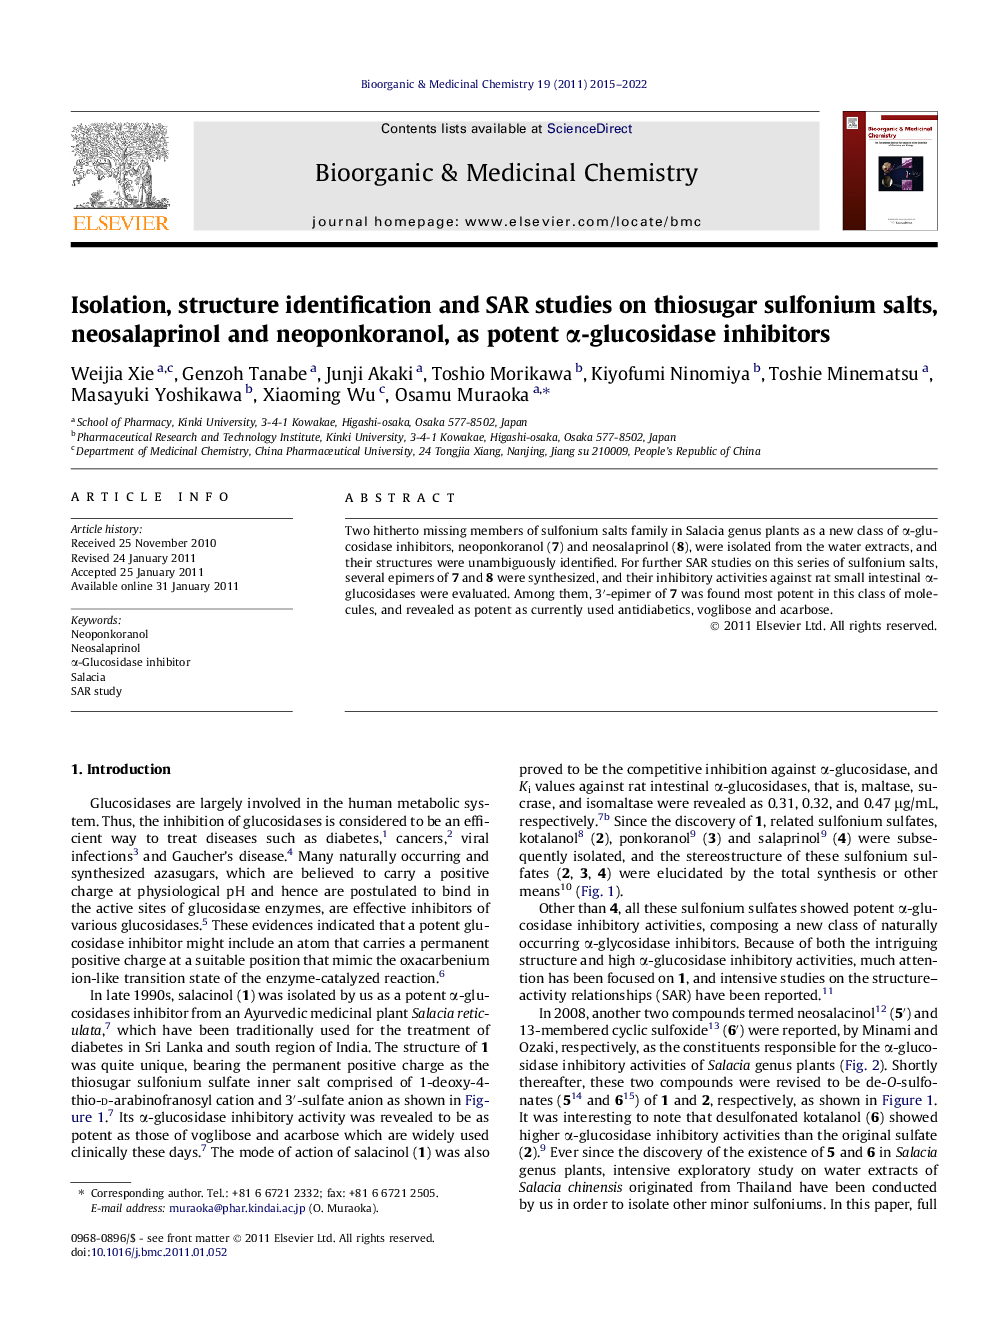 Isolation, structure identification and SAR studies on thiosugar sulfonium salts, neosalaprinol and neoponkoranol, as potent Î±-glucosidase inhibitors